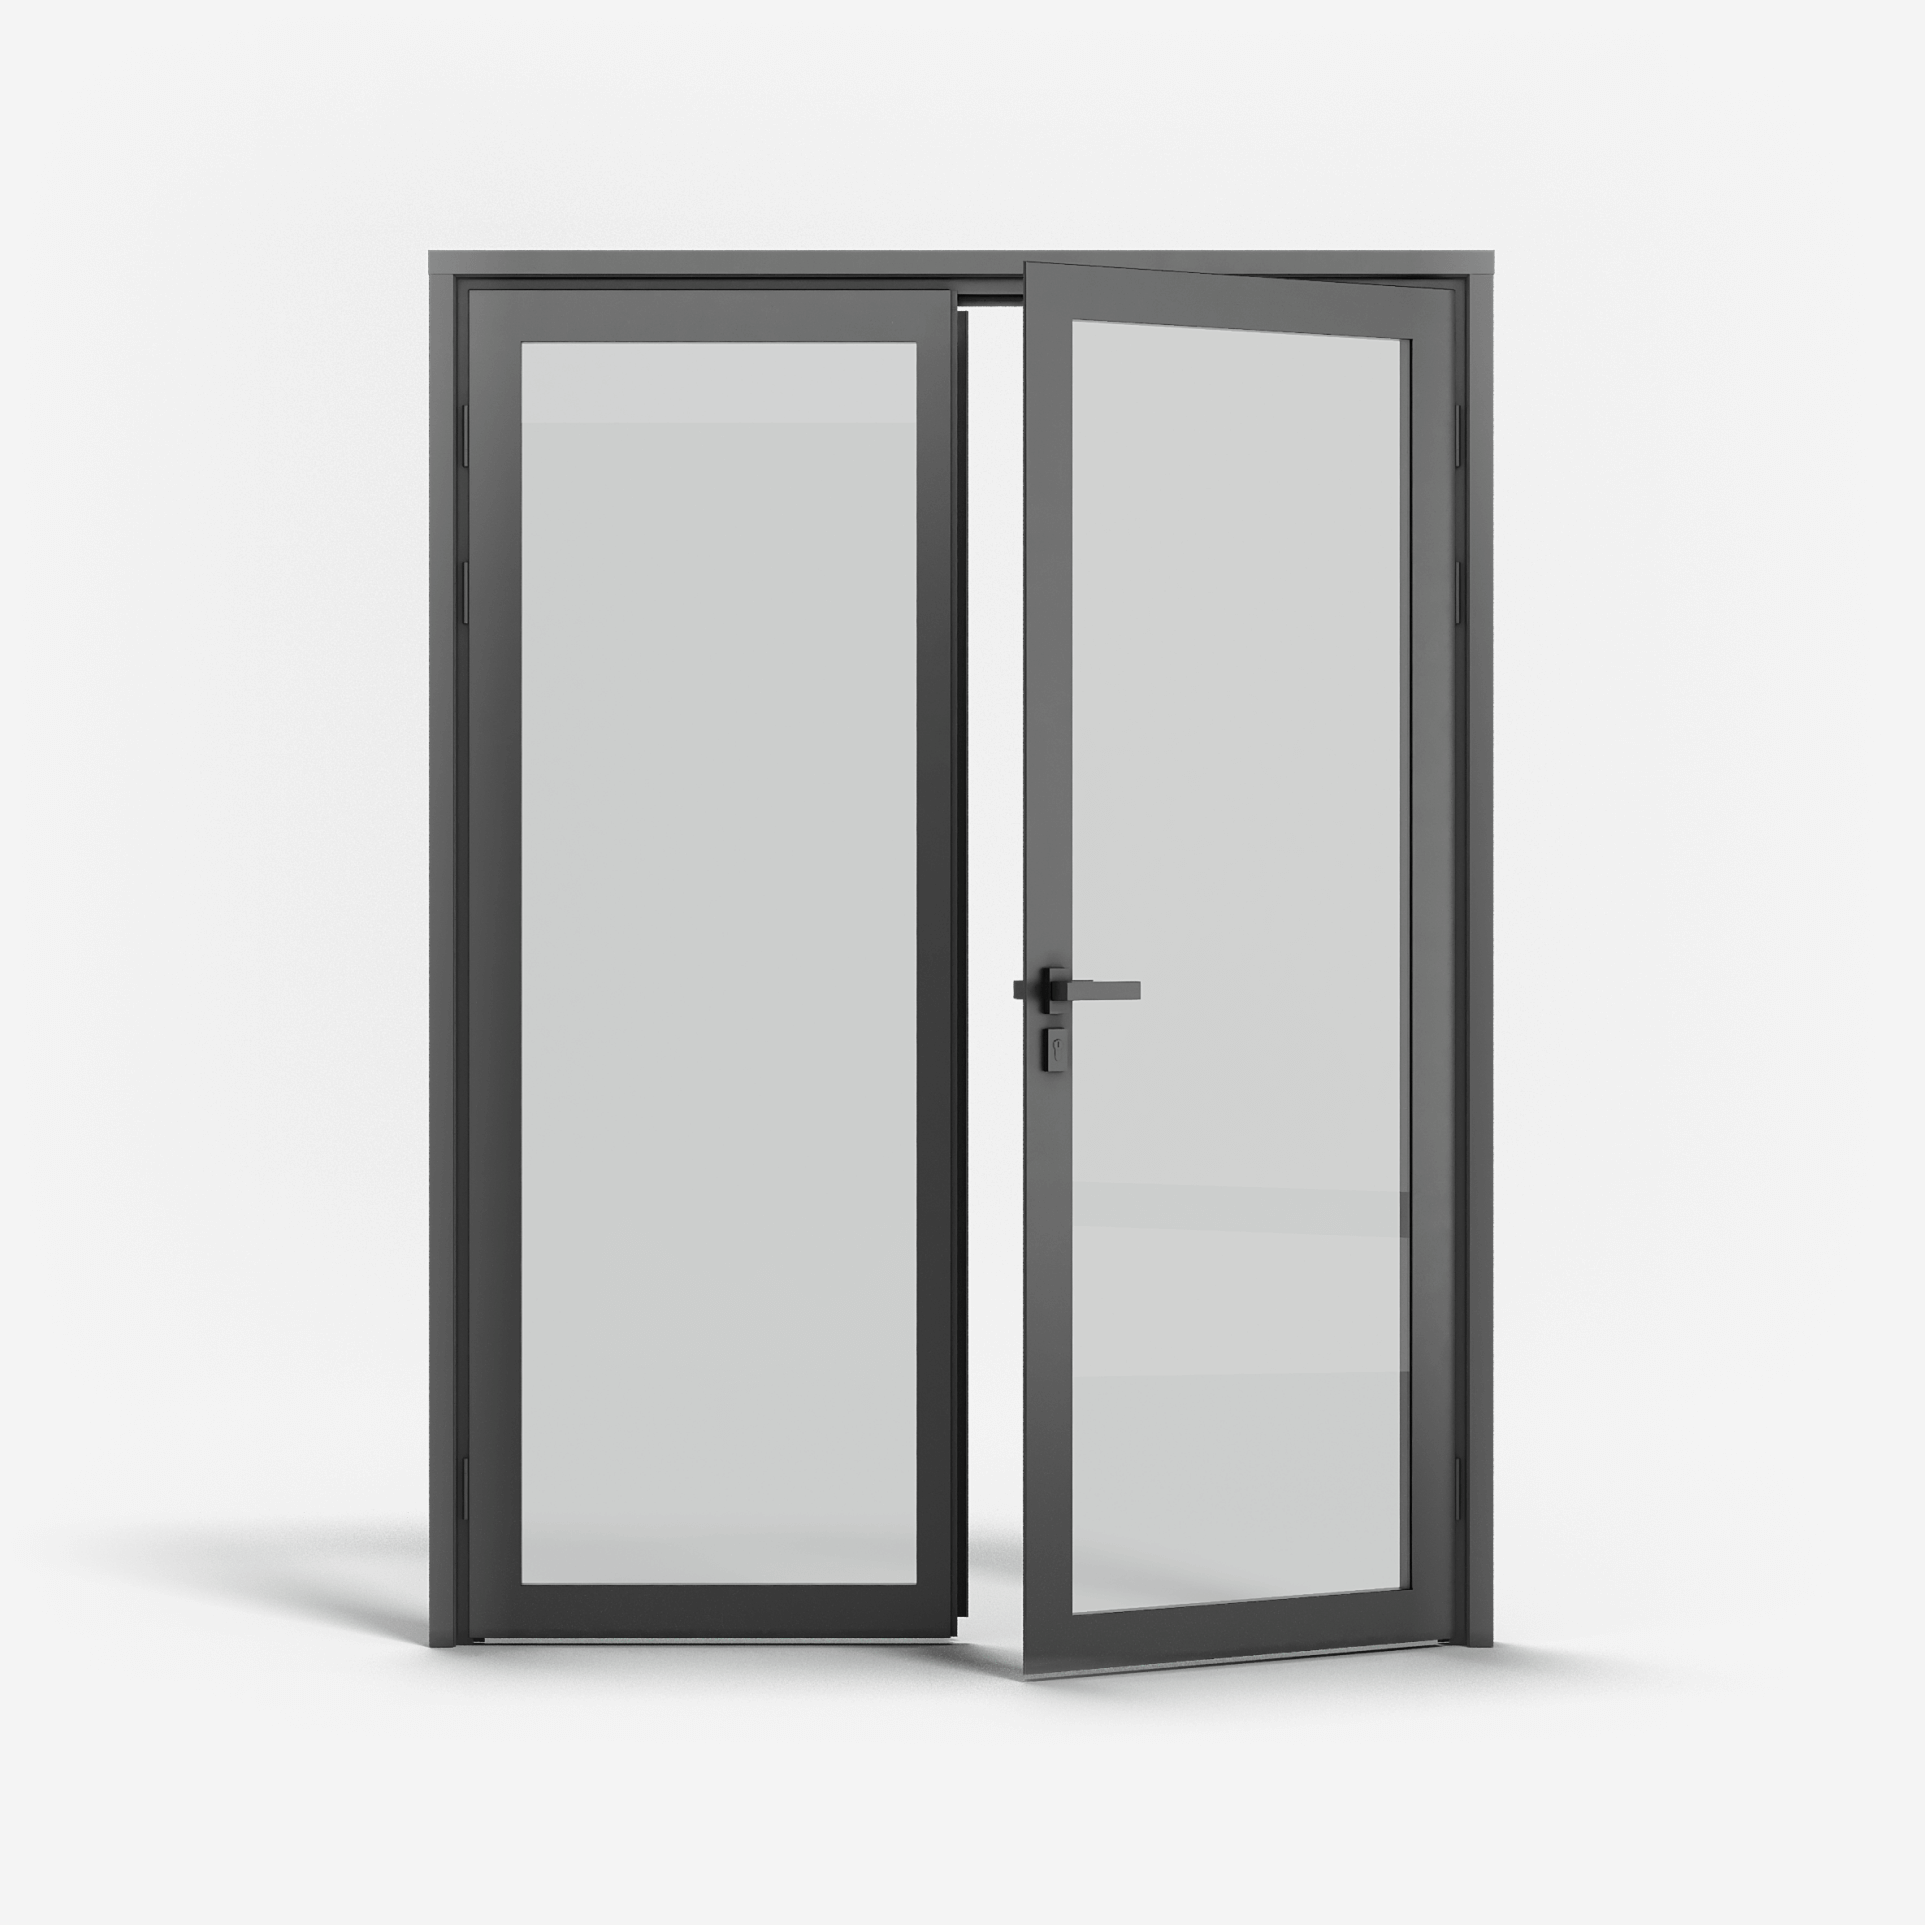 KOMPAS Aluminum Framed Double Swing Door - Out